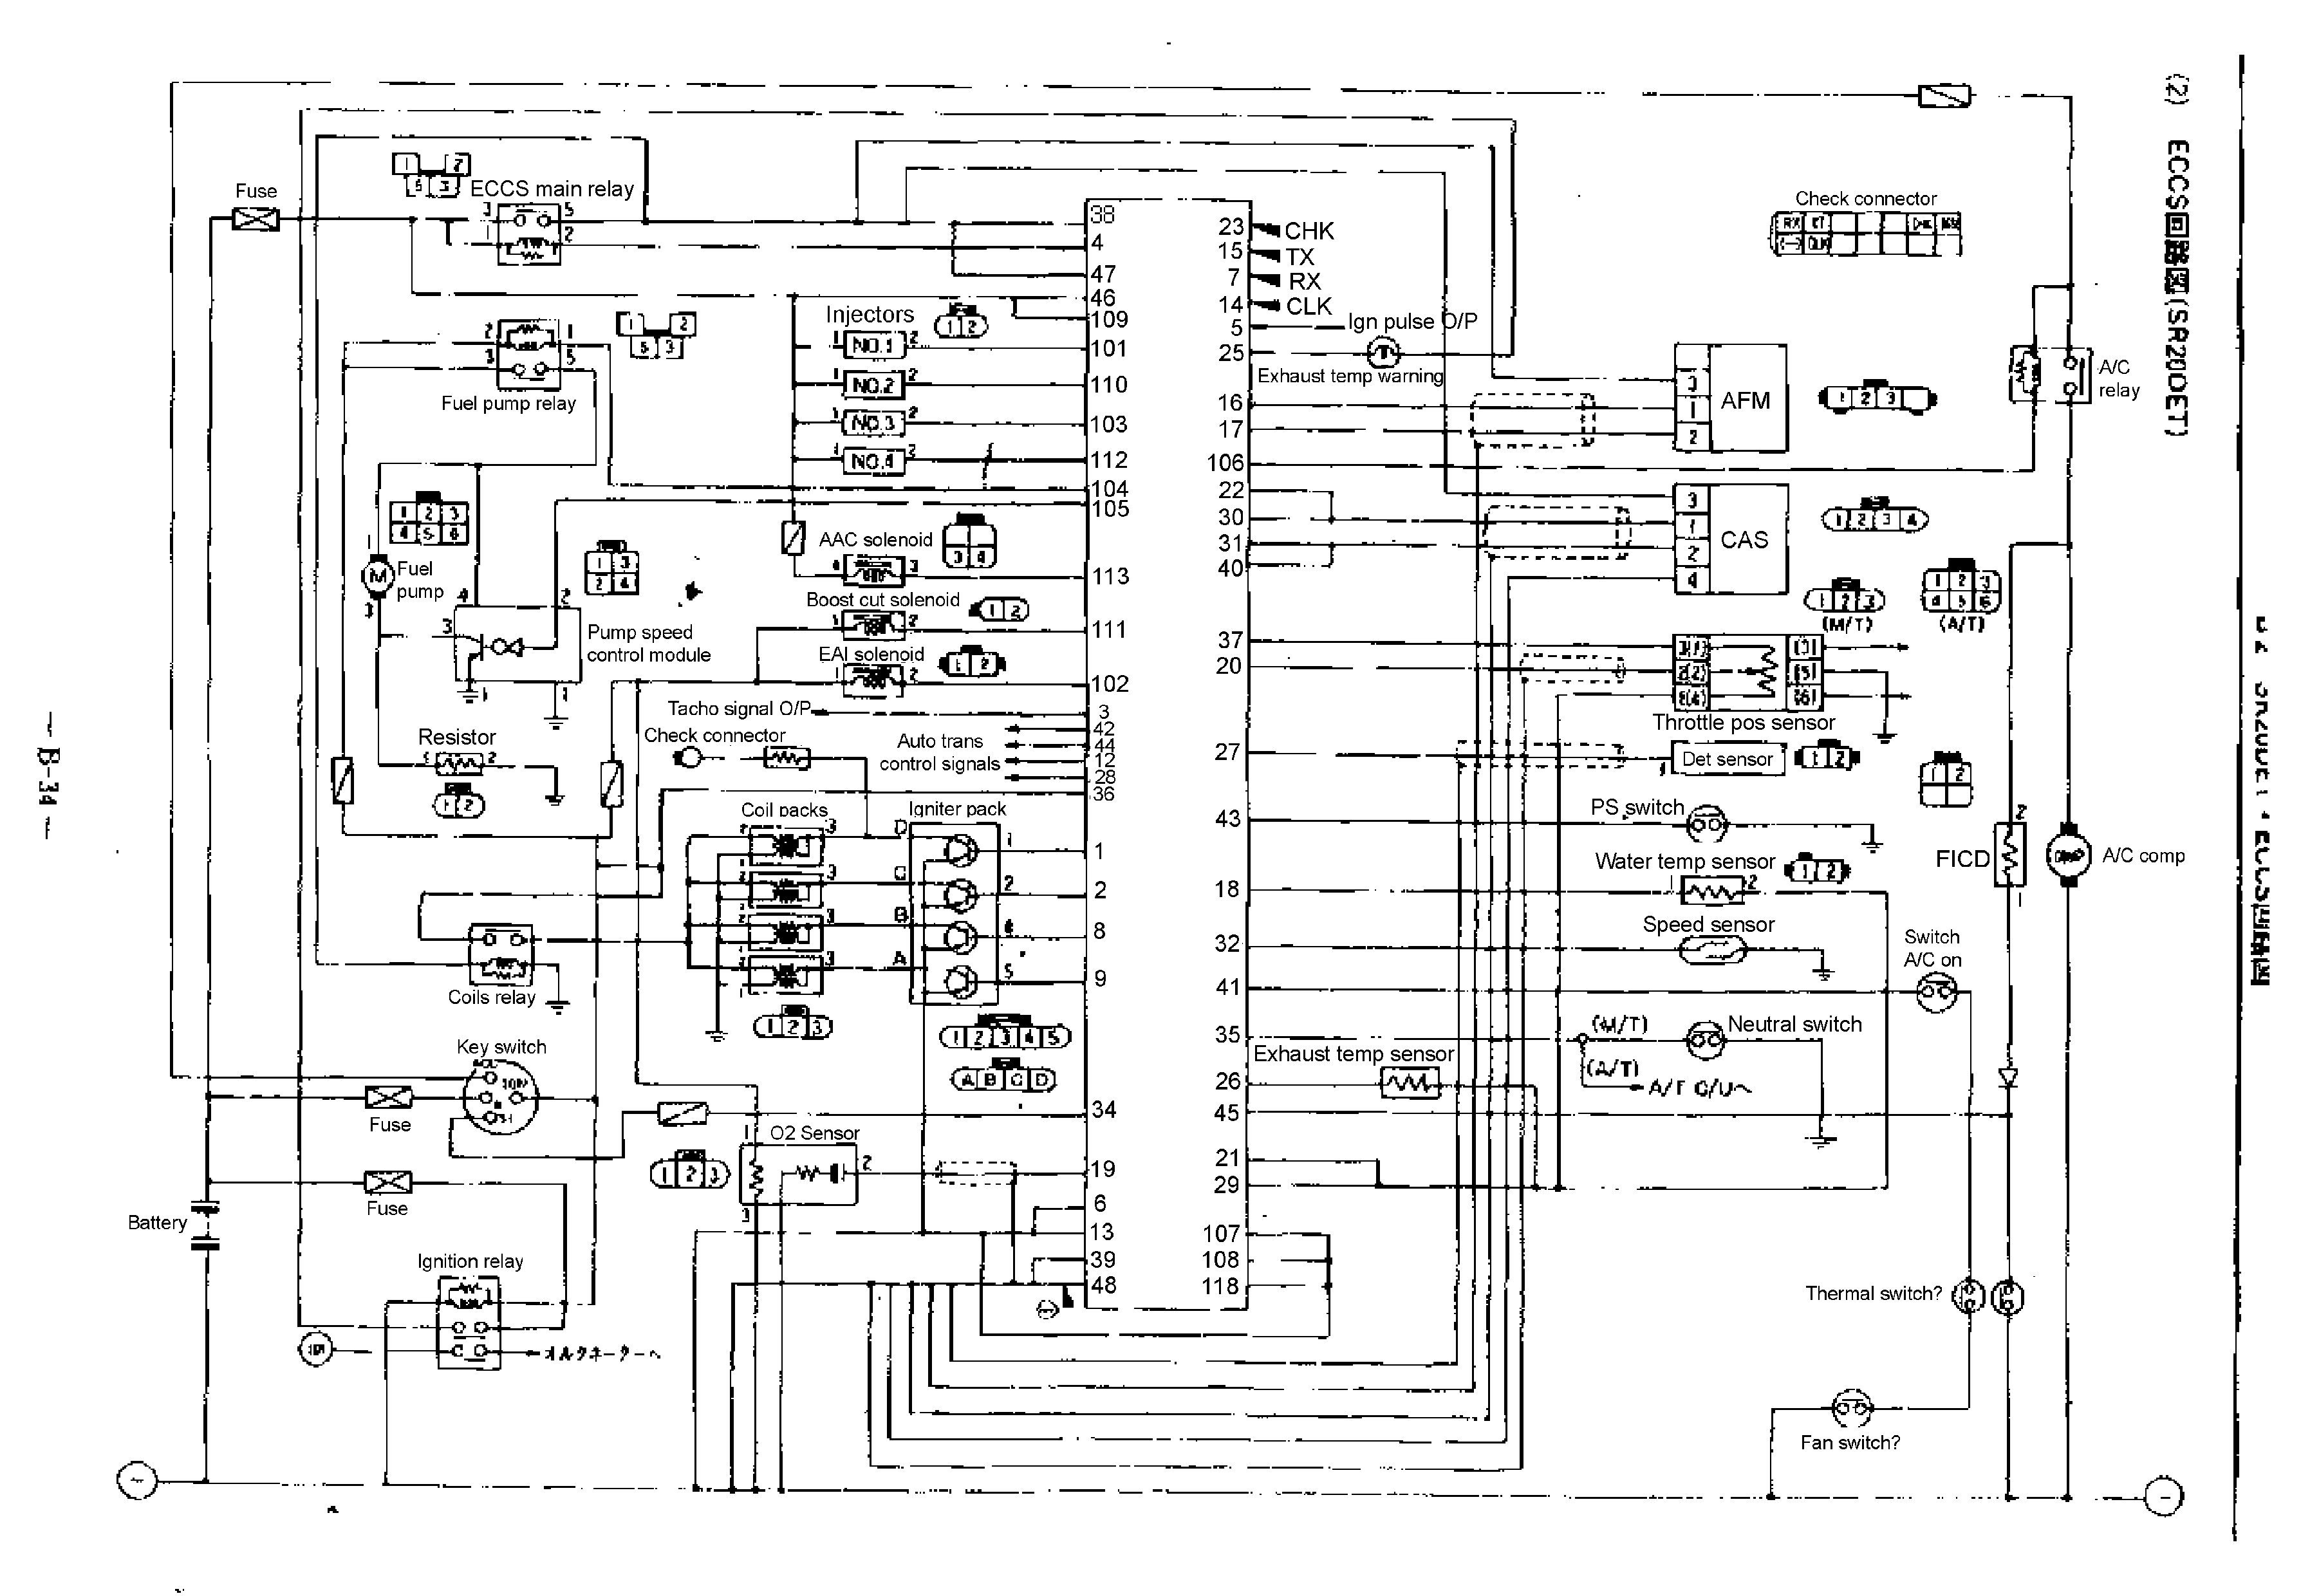 SR20 wiring diagrams- trinituner.com